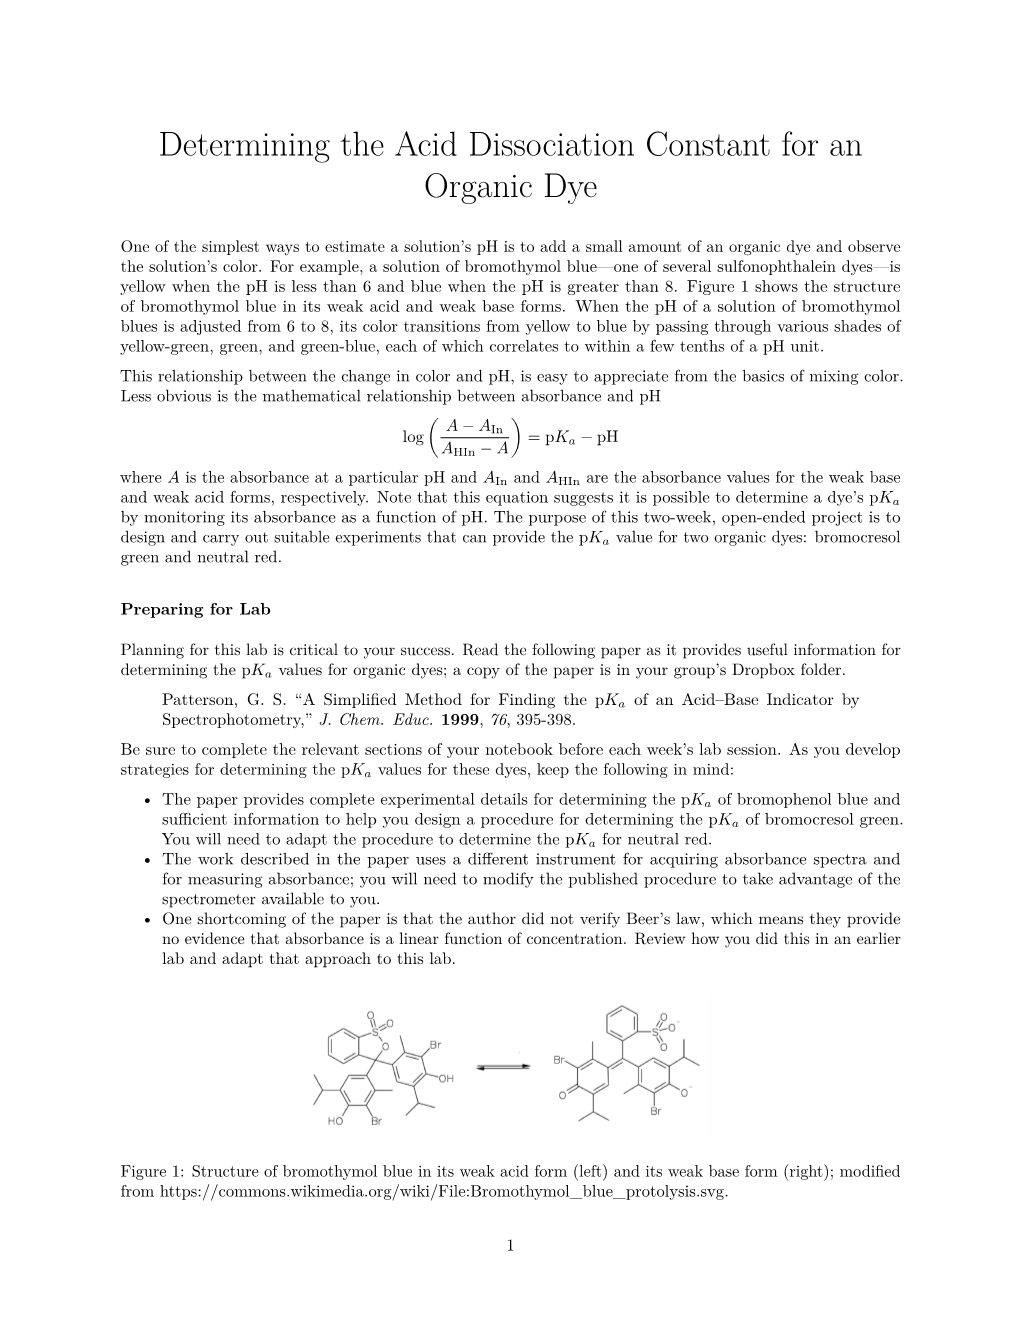 Determining the Acid Dissociation Constant for an Organic Dye